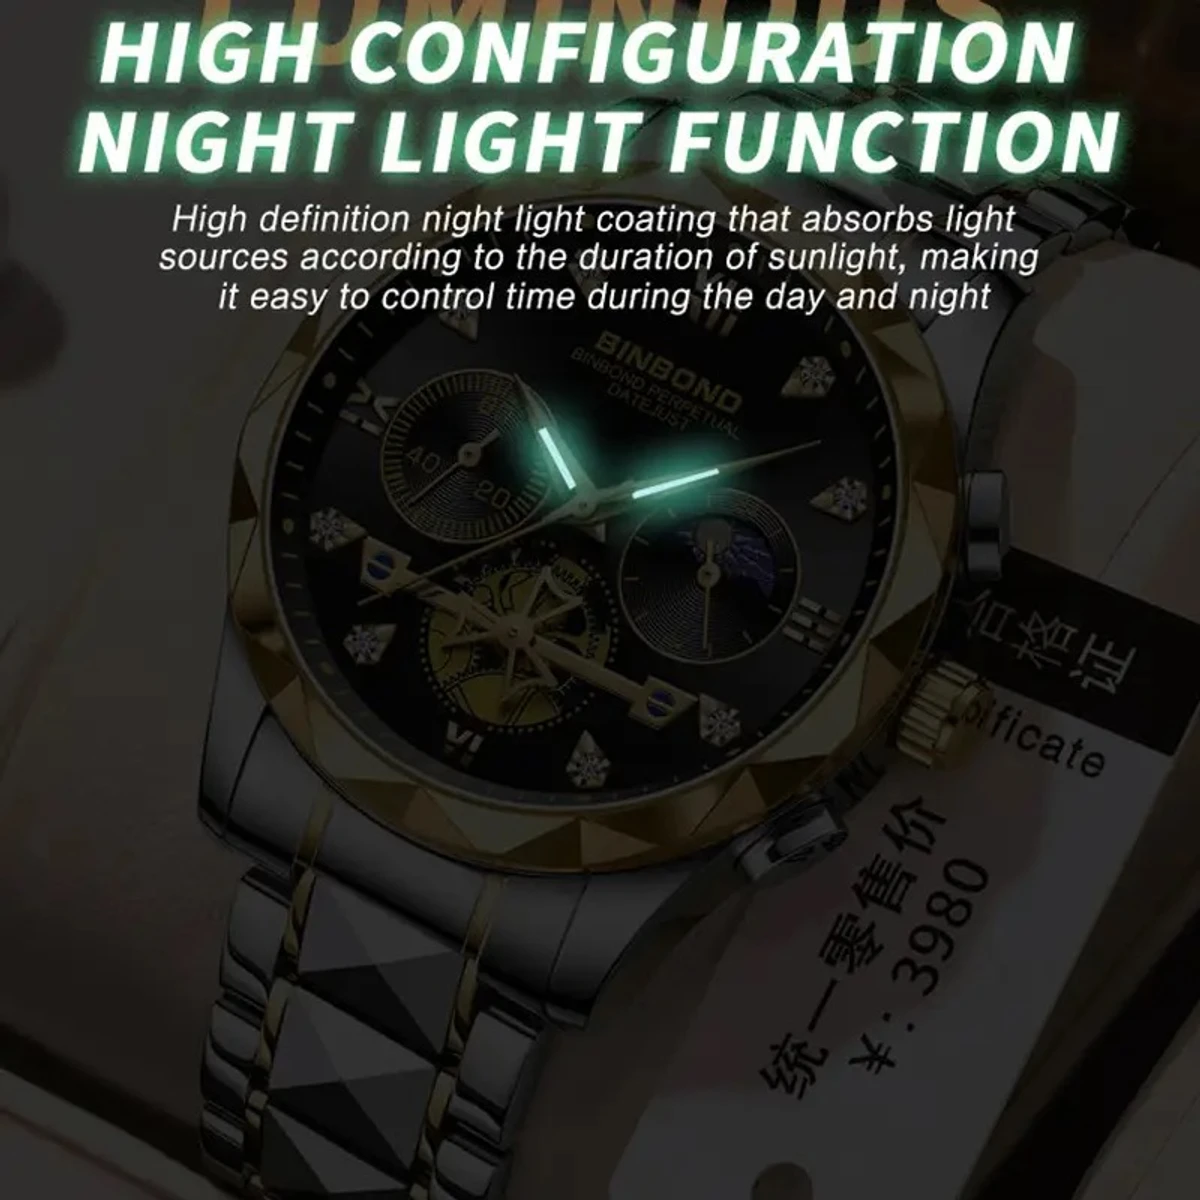 New Luxury Watch For Men Stainless Steel Waterproof Business Sport Wristwatches- Silver